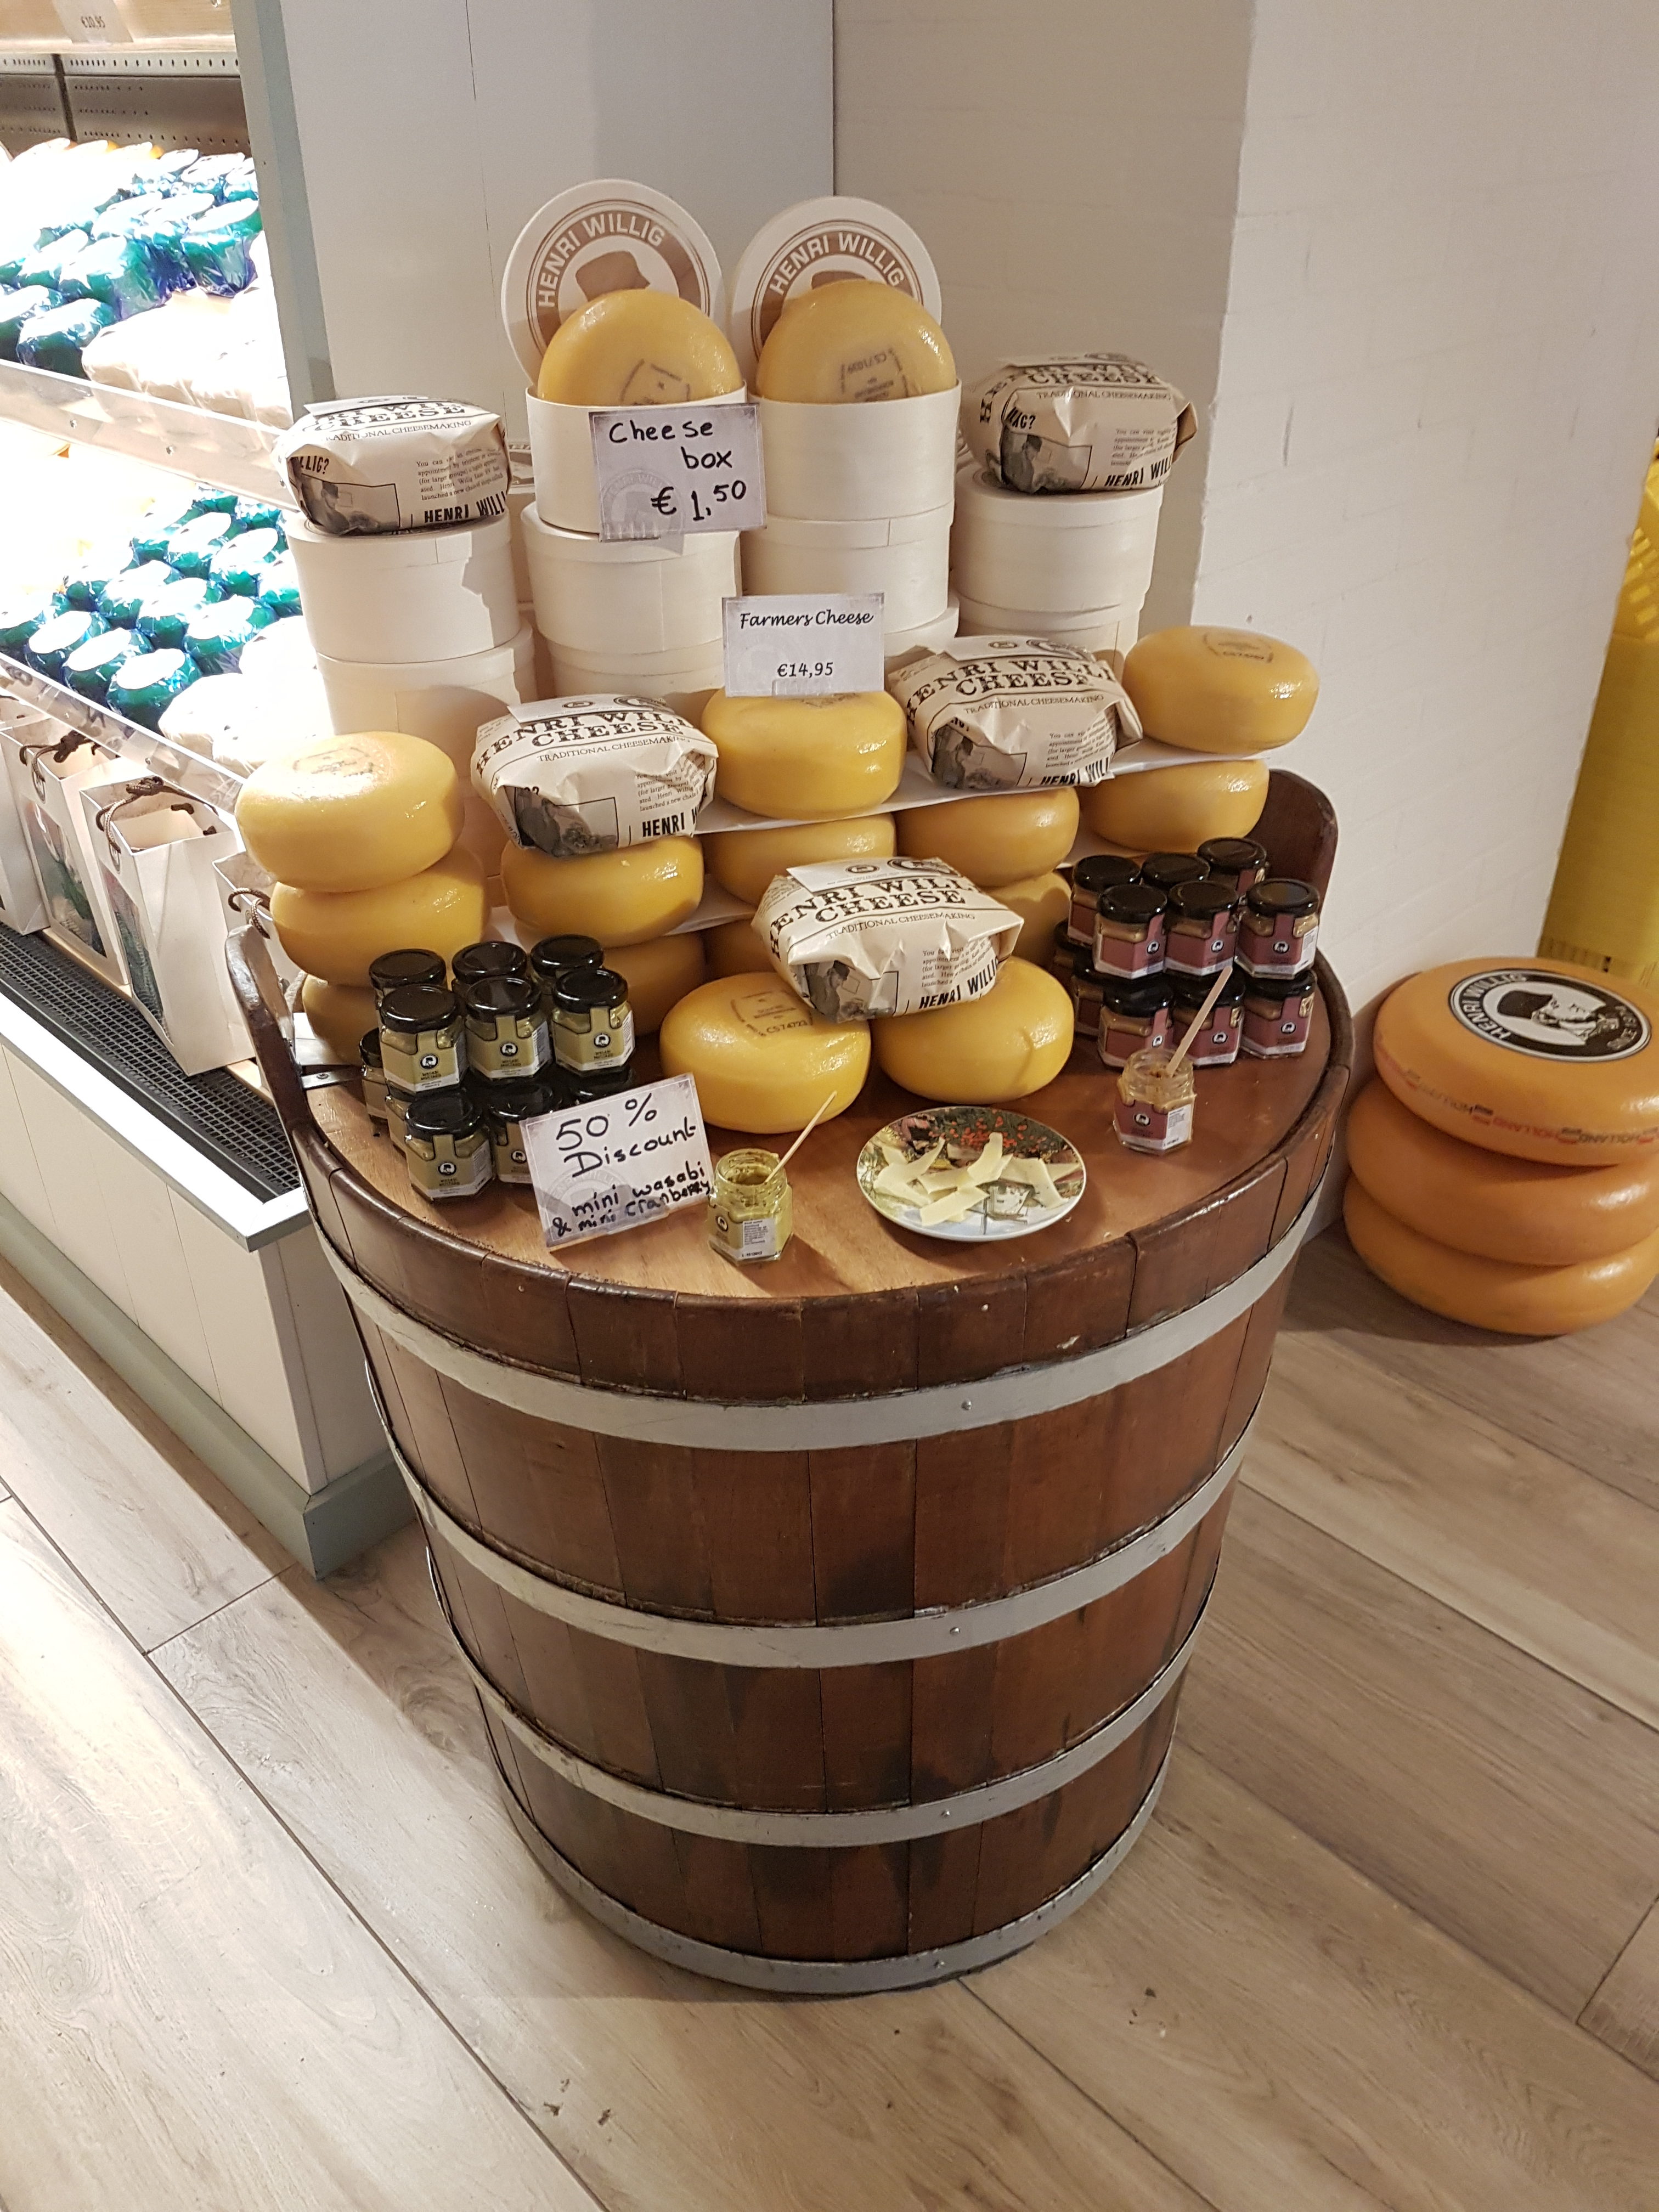 Food Diary - Amsterdam - Amsterdam Cheese Company